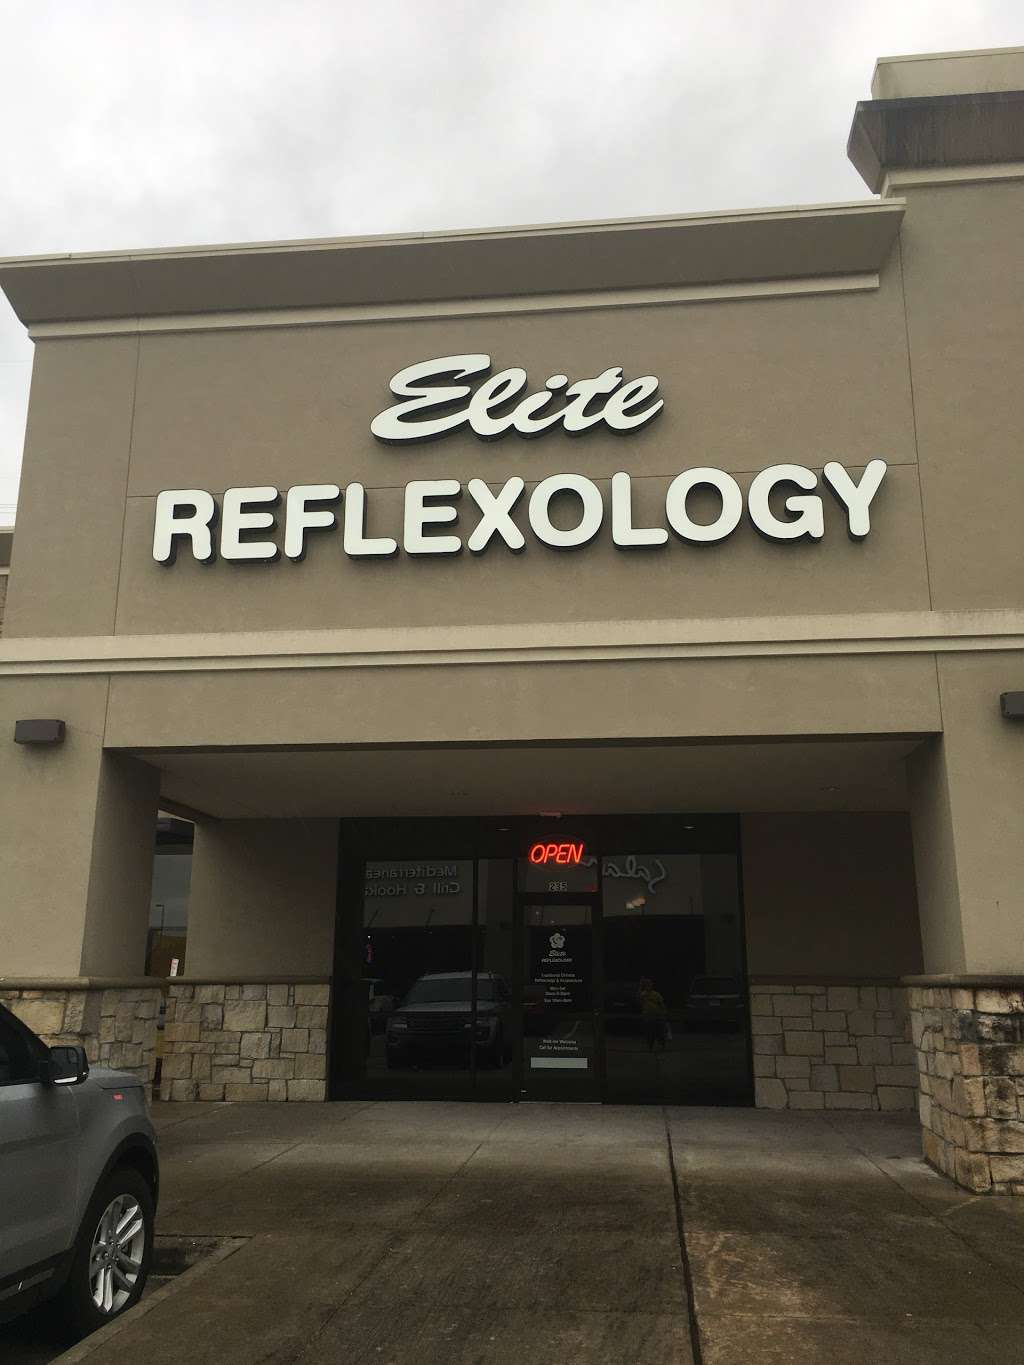 Elite Reflexology & Massage | 9506 N Sam Houston Pkwy E #235, Humble, TX 77396 | Phone: (832) 789-5550